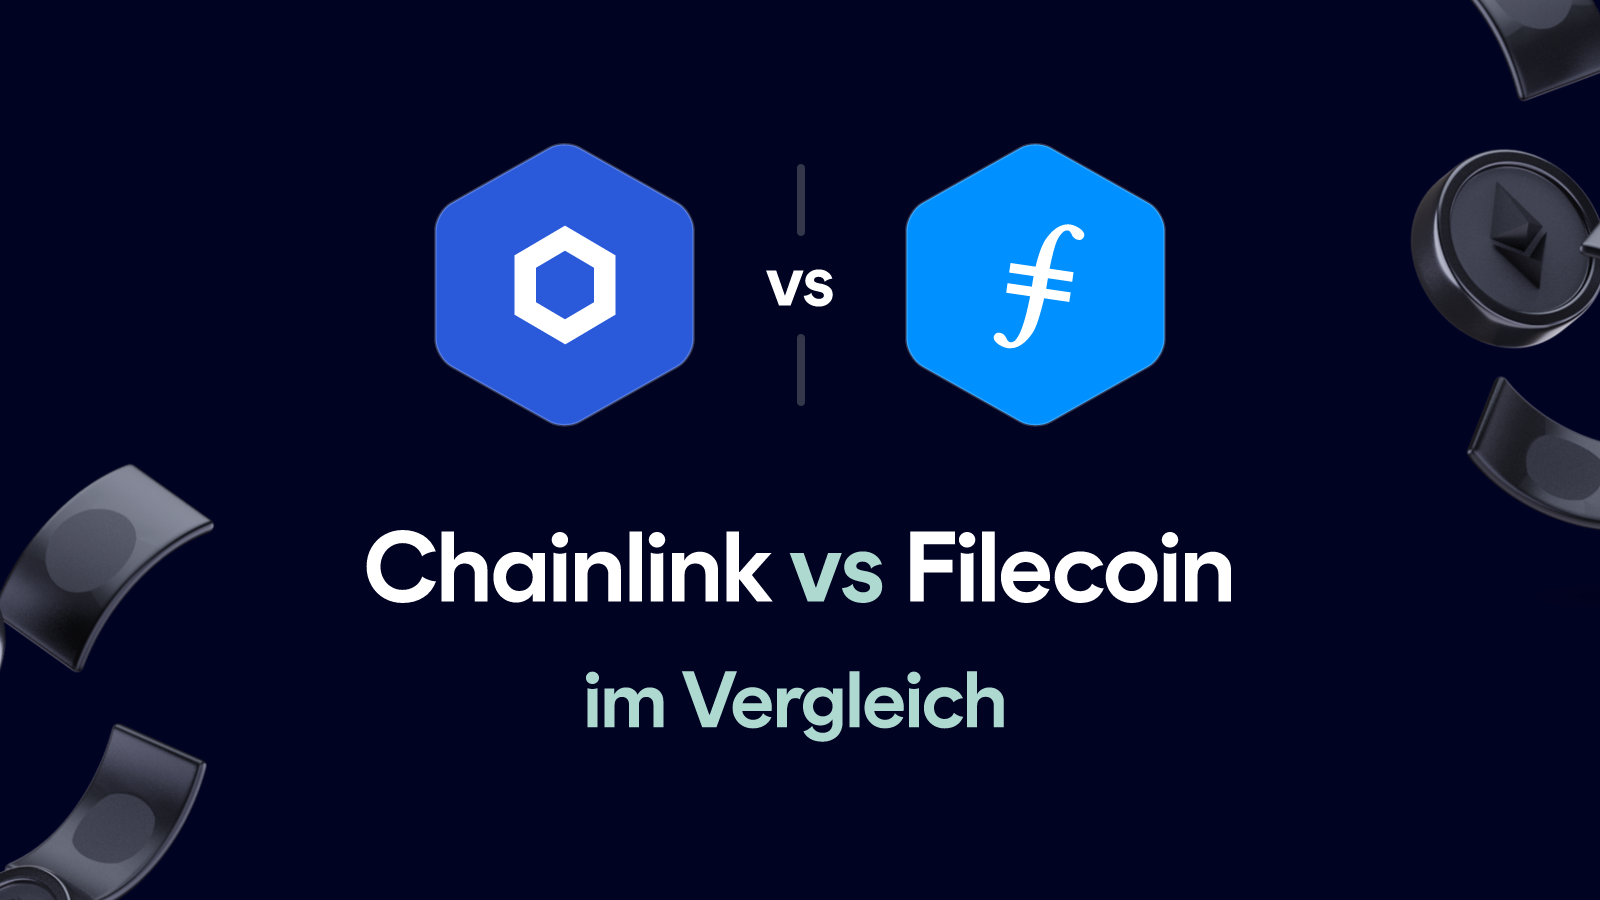 Chainlink vs Filecoin